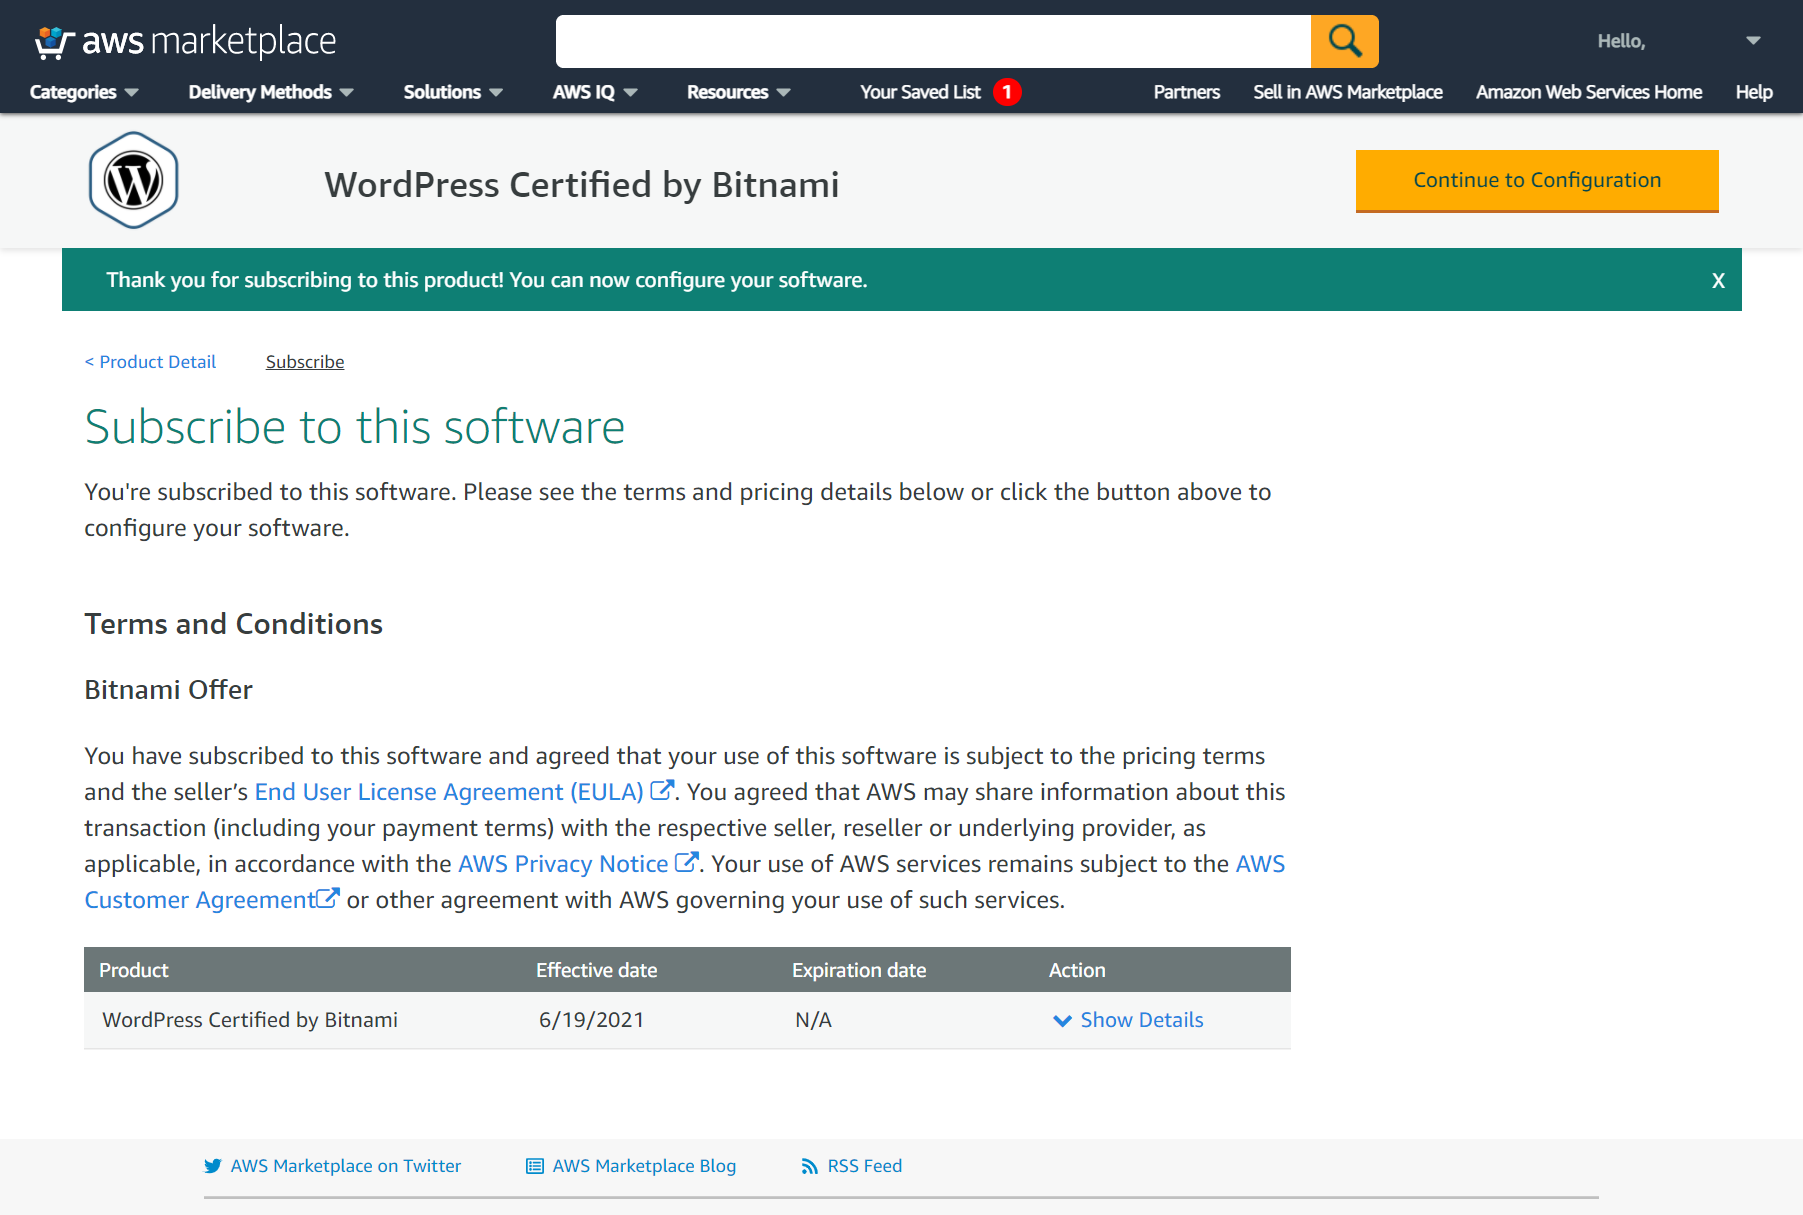 FireShot Capture 005 - AWS Marketplace_ WordPress Certified by Bitnami - aws.amazon.com.png